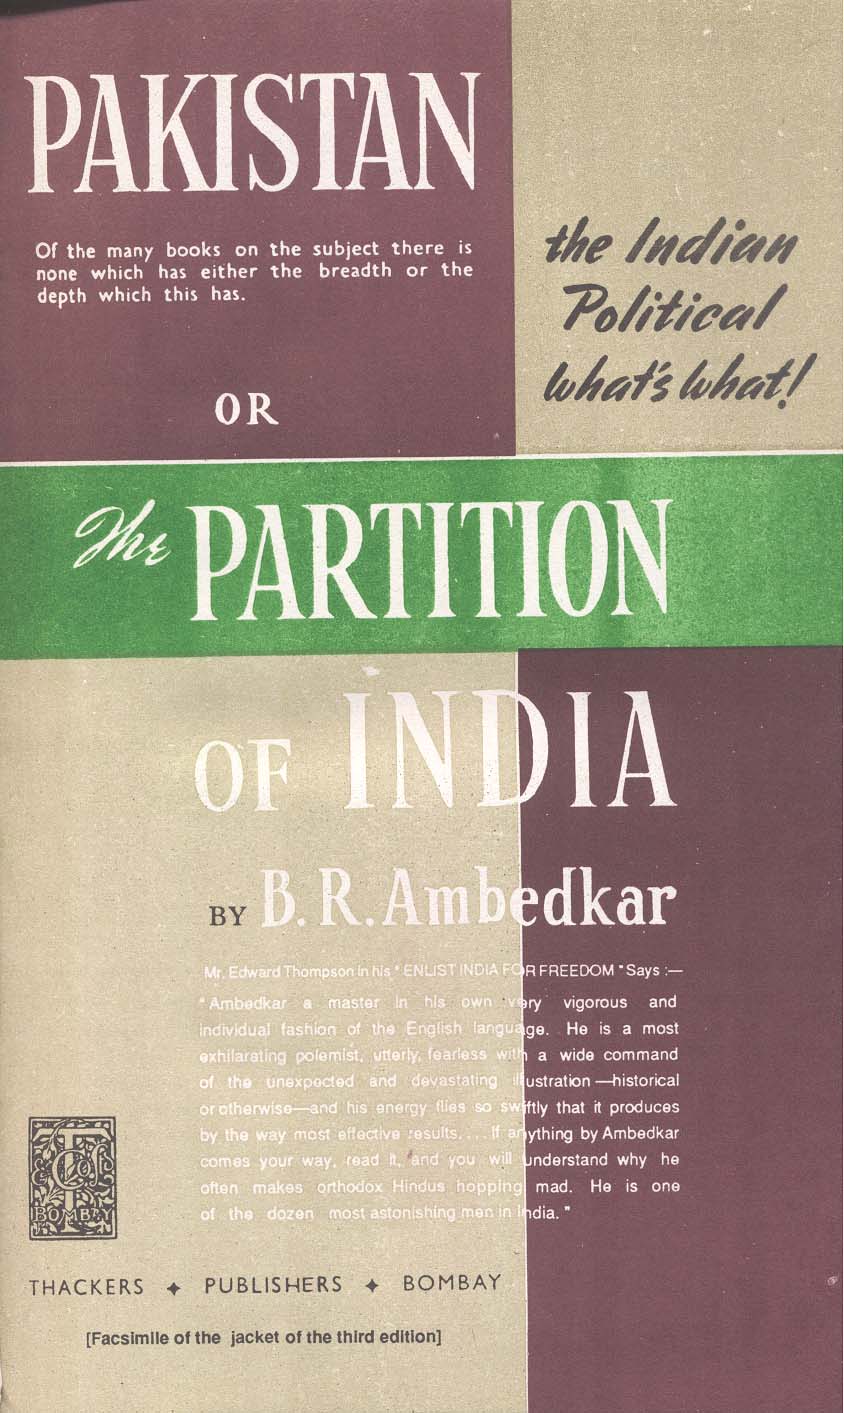 Indian Nationalism v/s Hindu Nationalism